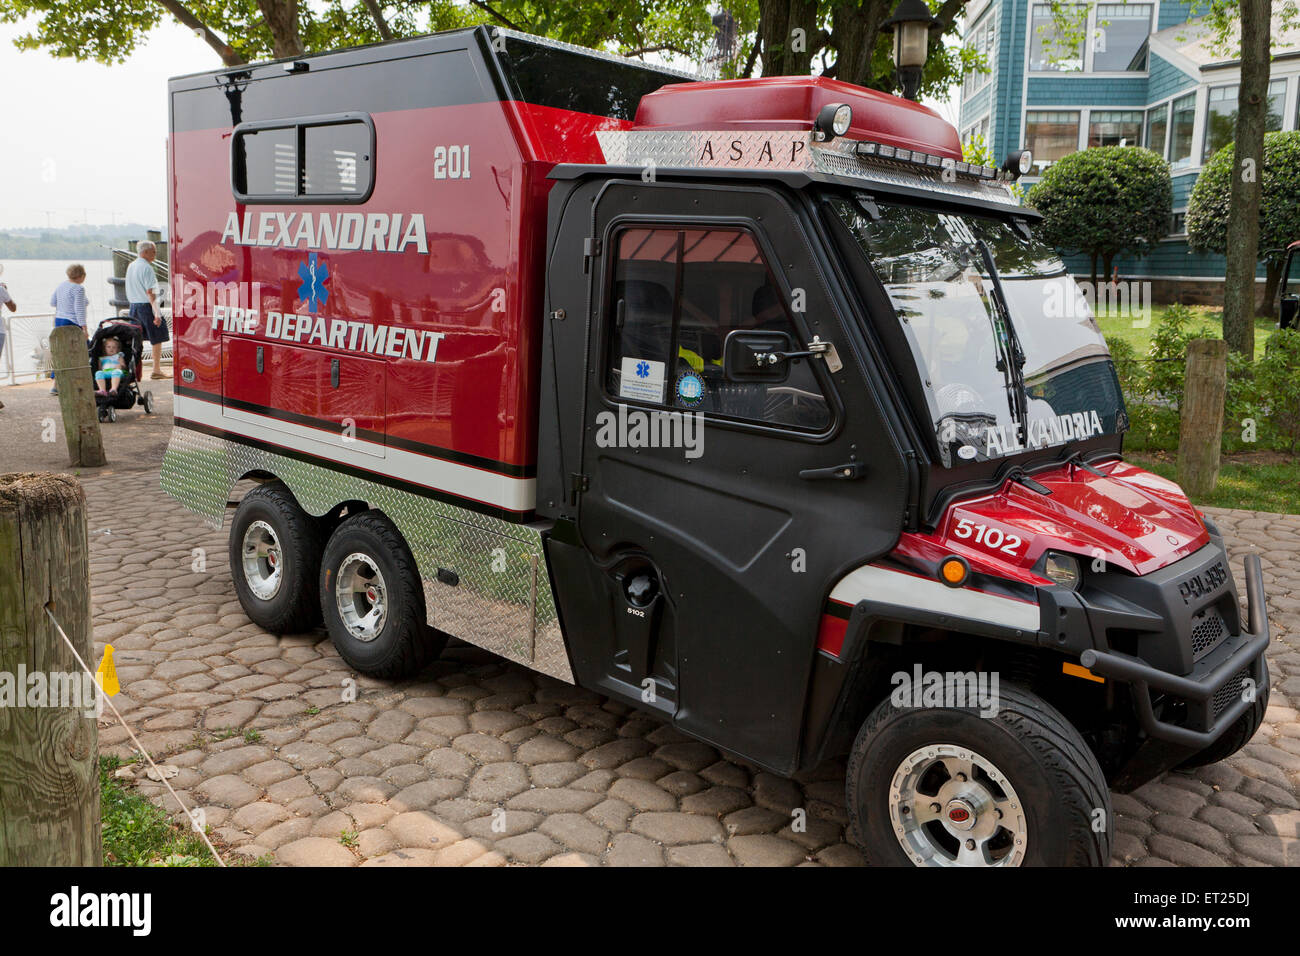 Fire Department ATV (véhicule tout terrain) camion - Alexandria, Virginia USA Banque D'Images